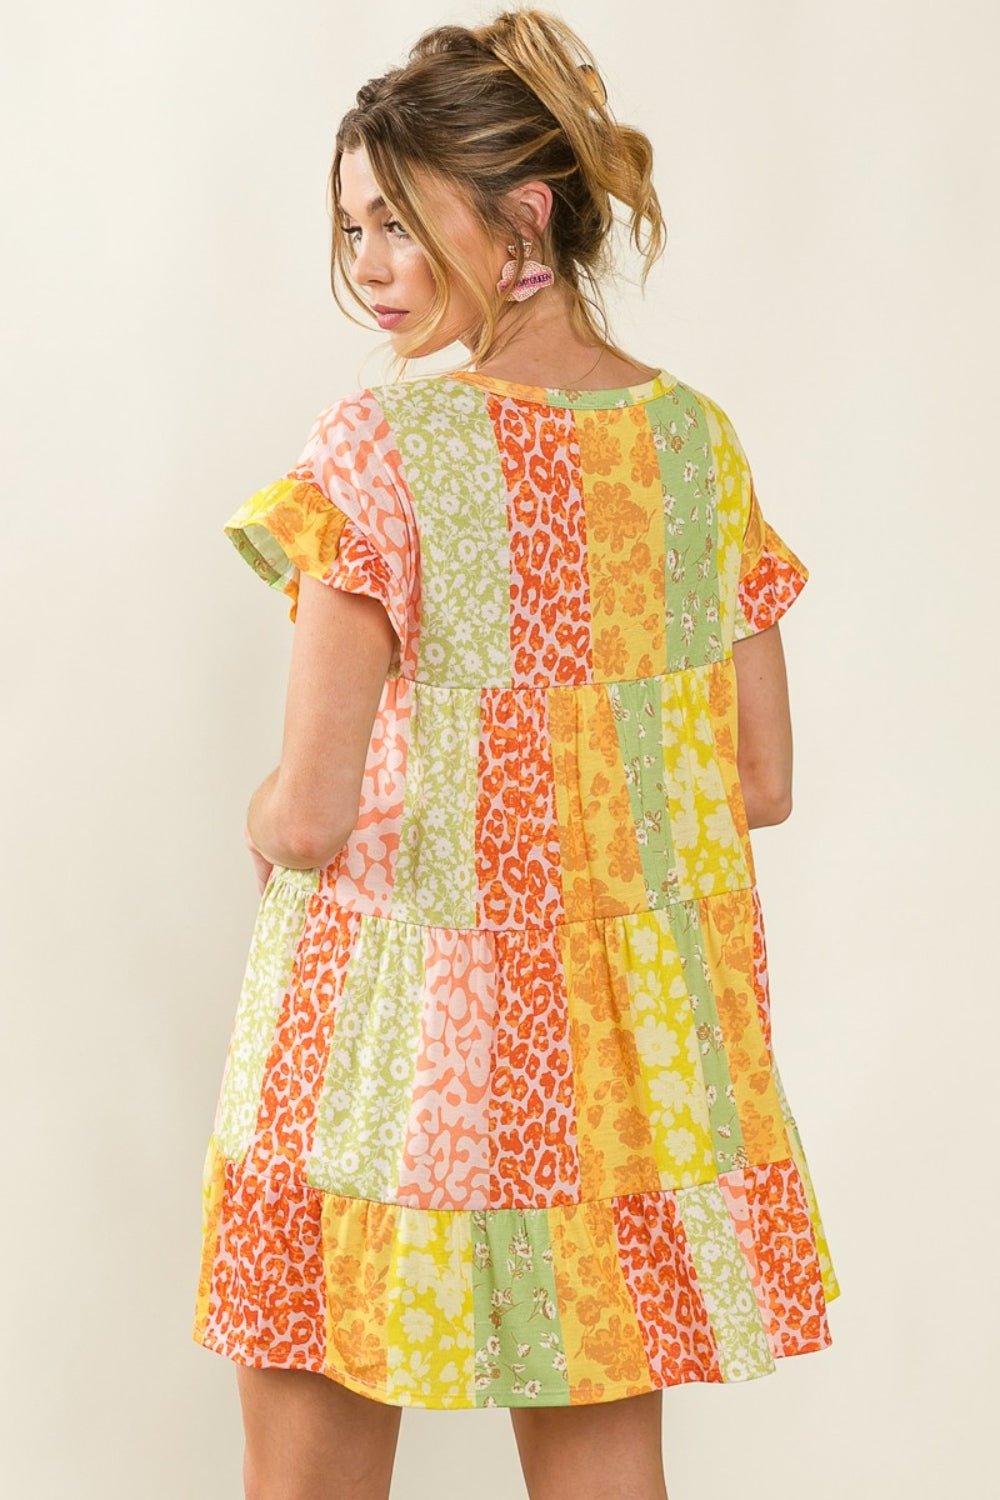 Leopard Short Sleeve Mini Dress in Orange/LimeMini DressBiBi